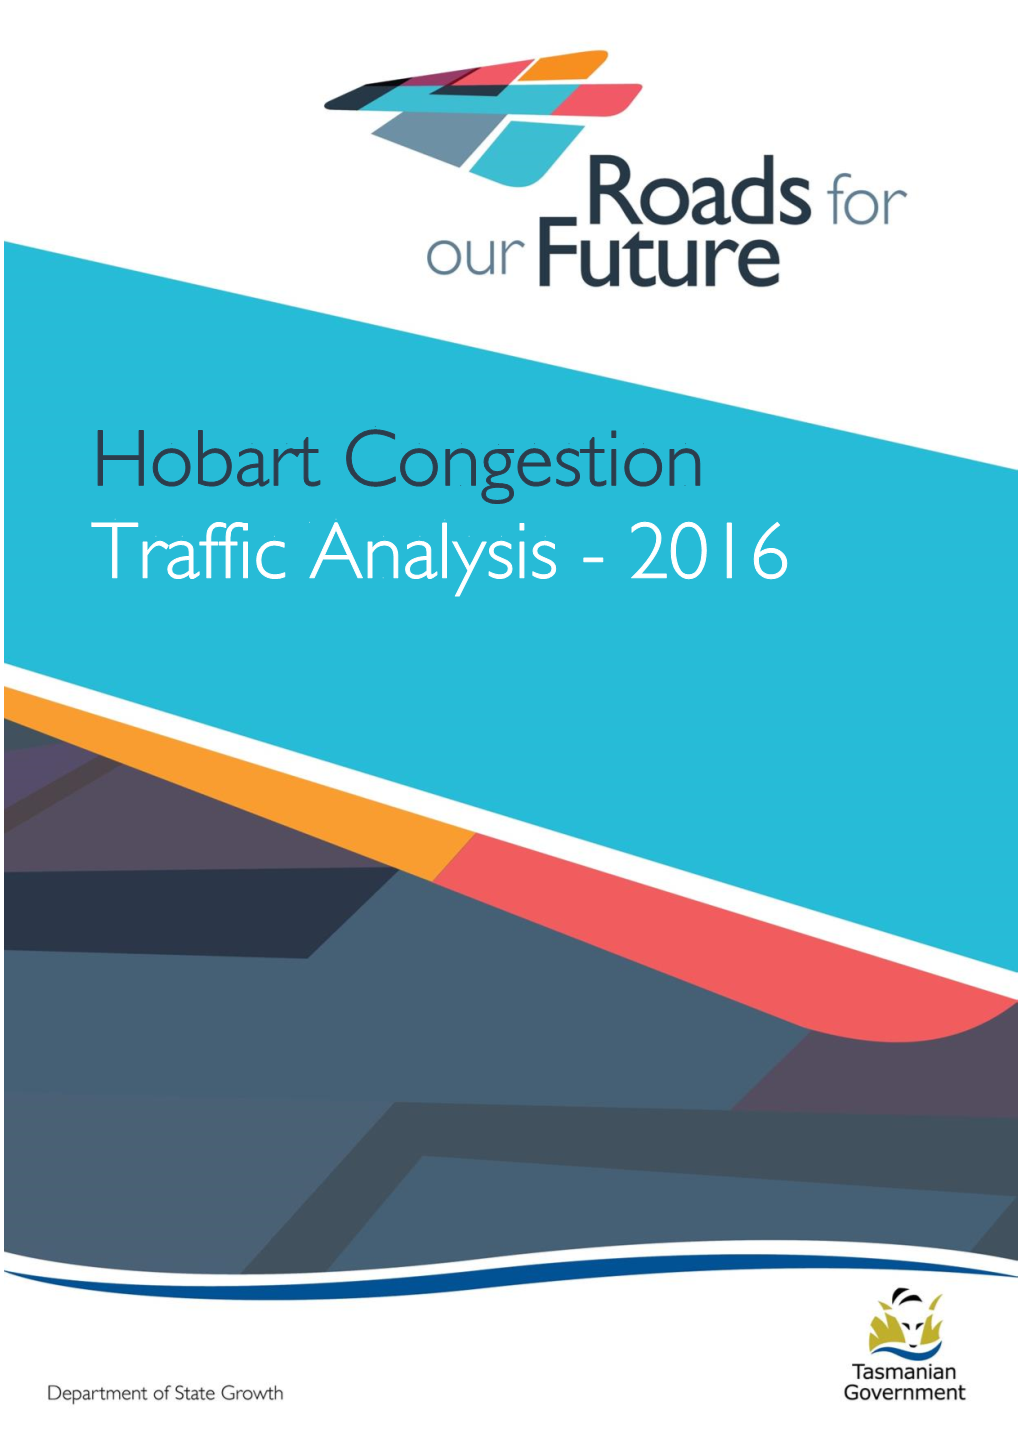 Hobart Congestion Traffic Analysis - 2016